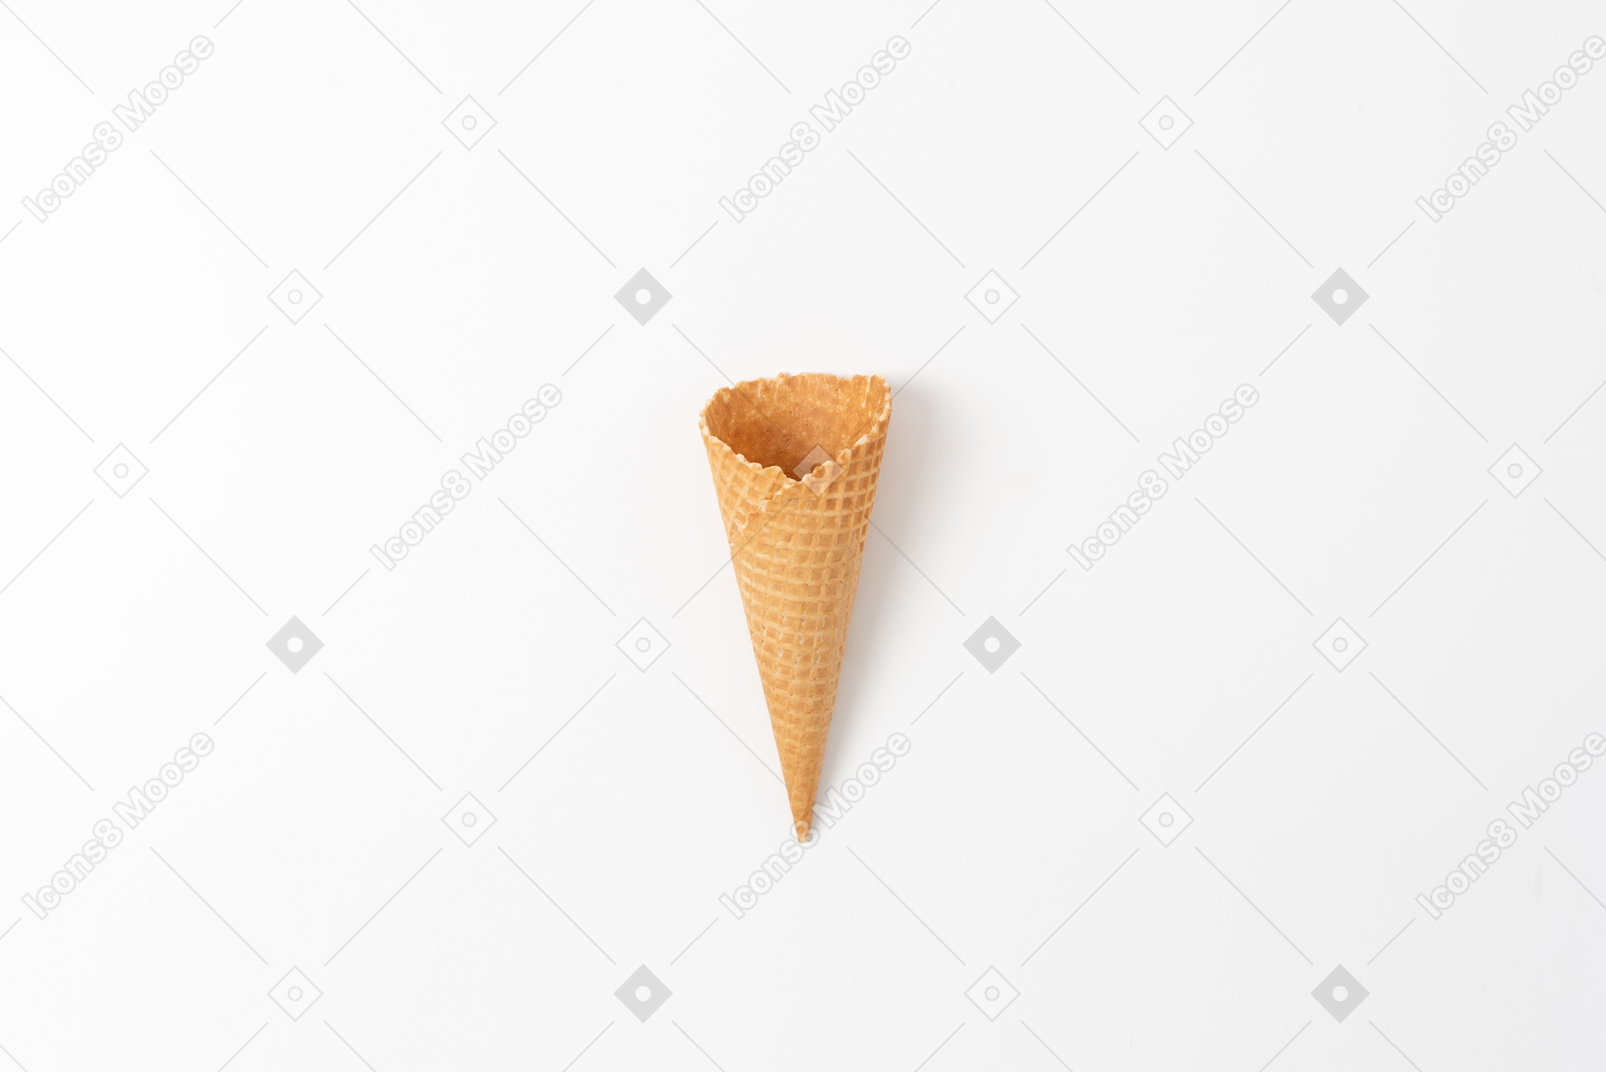 Ice cream cone on a white background